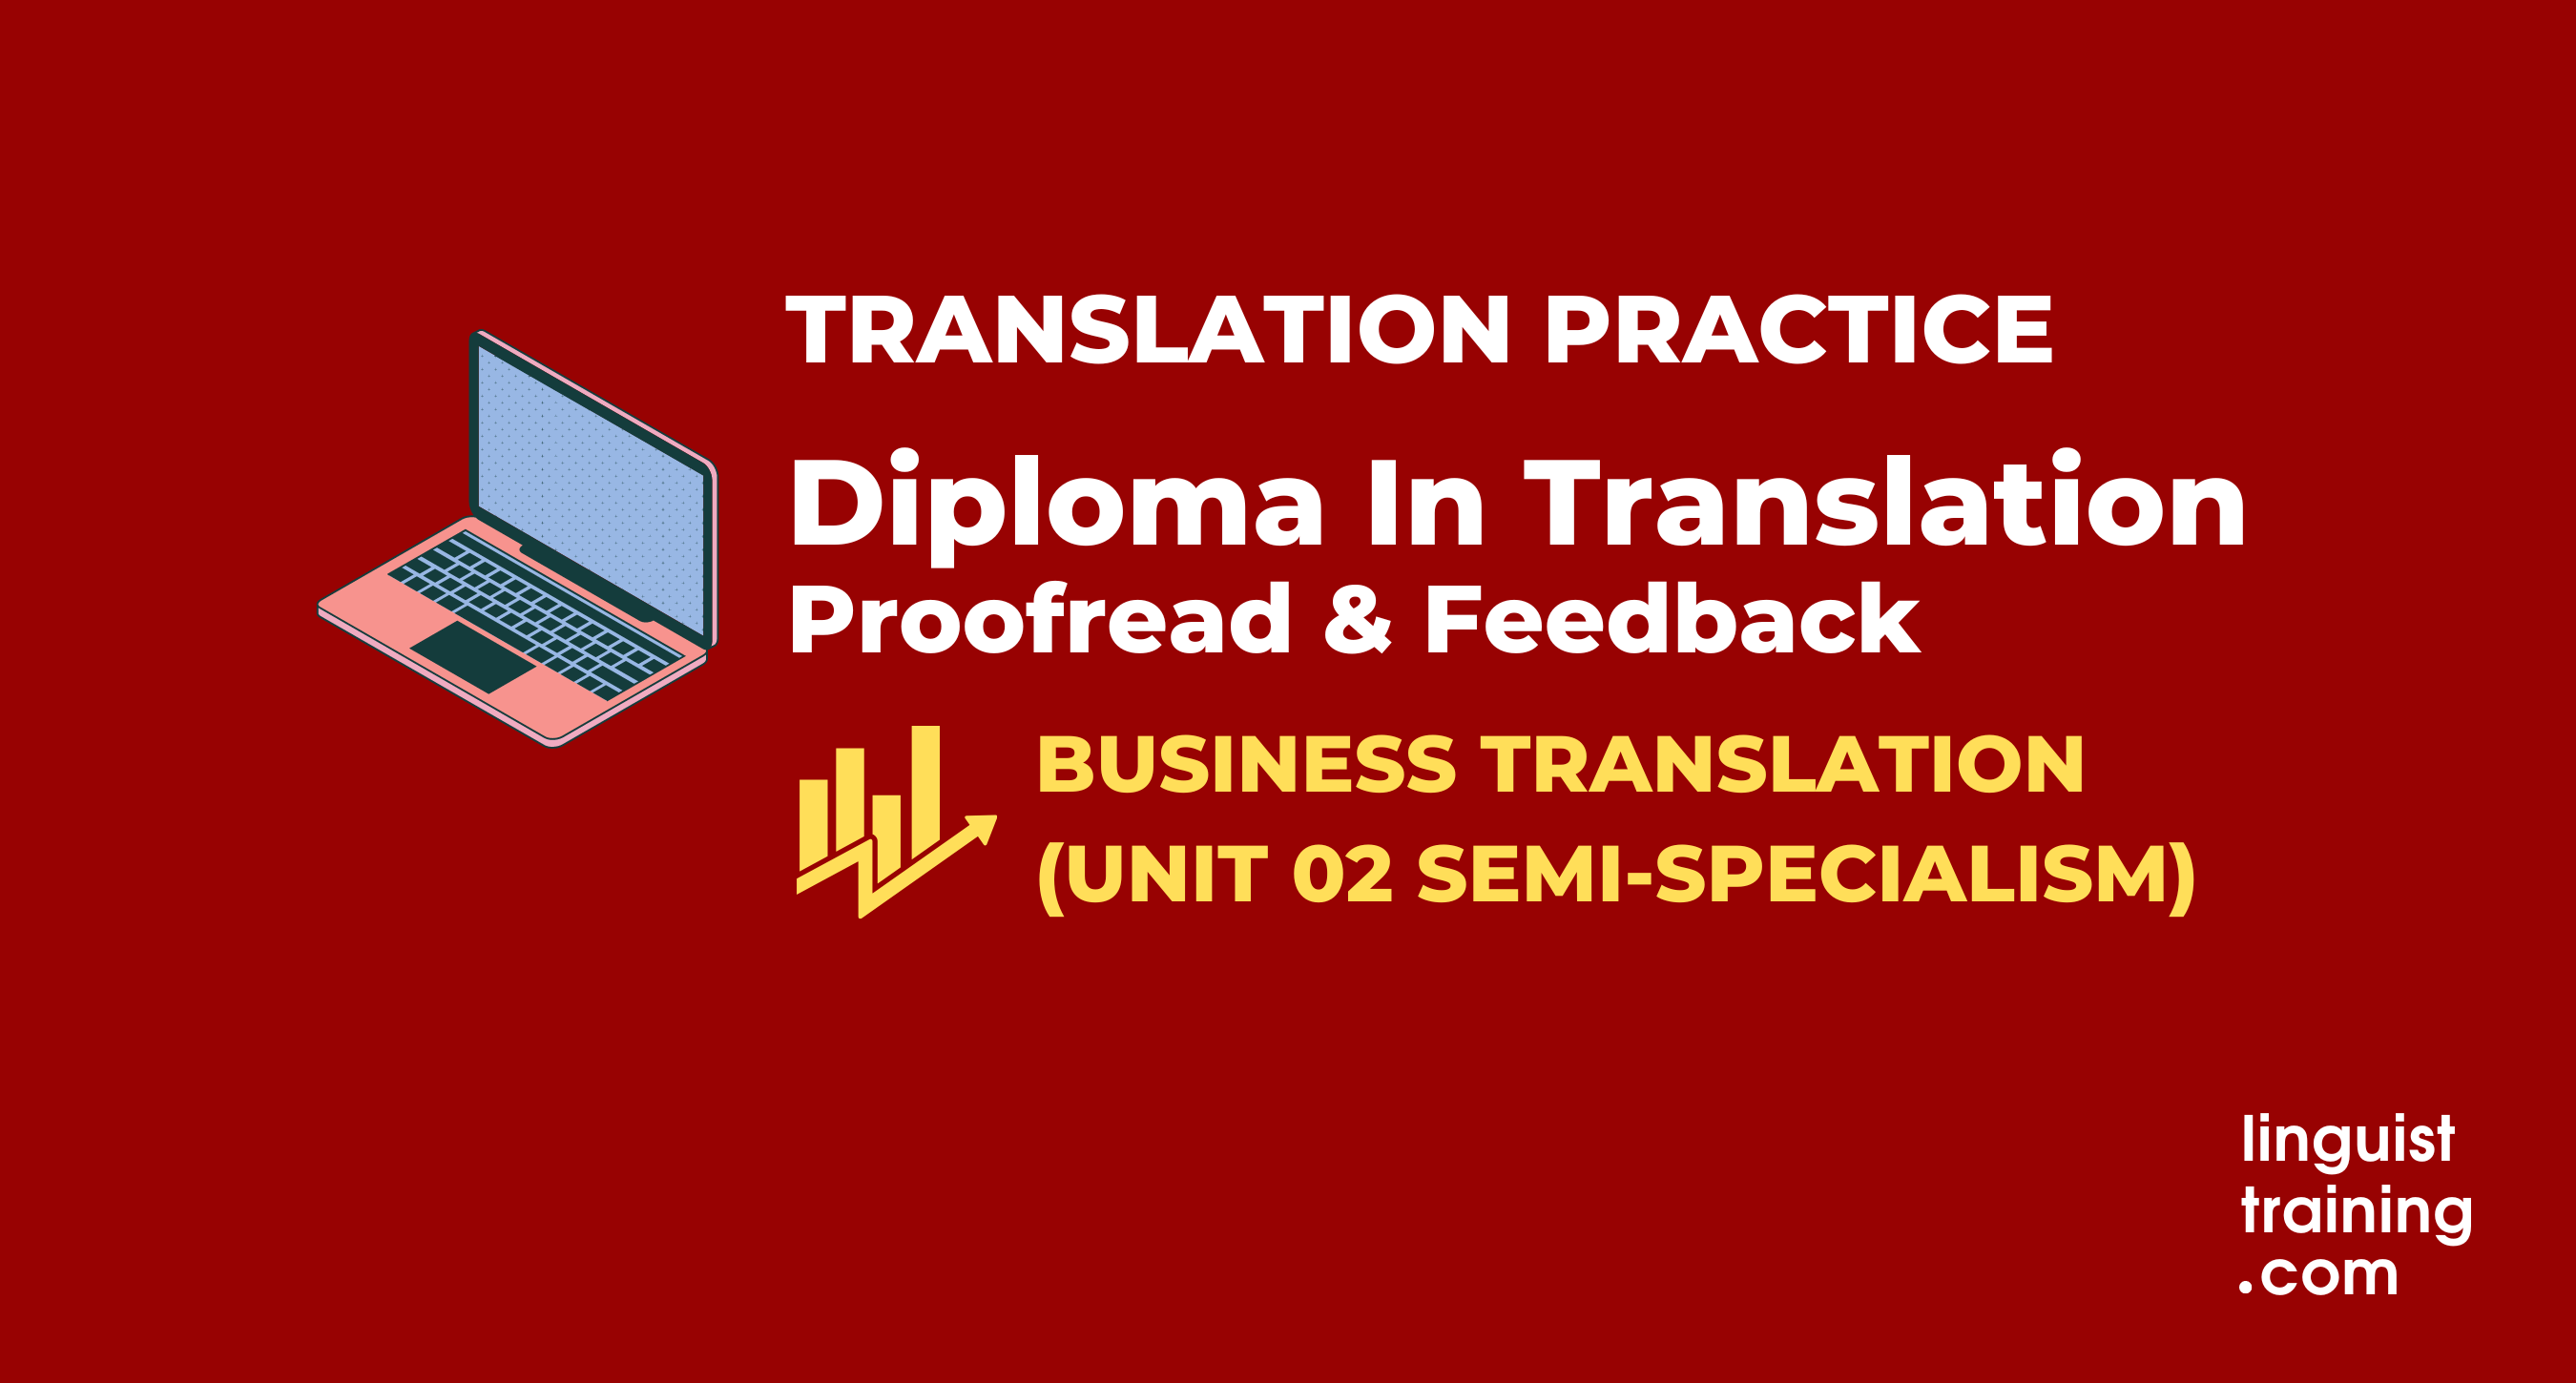 DipTrans BUSINESS Translation Practice